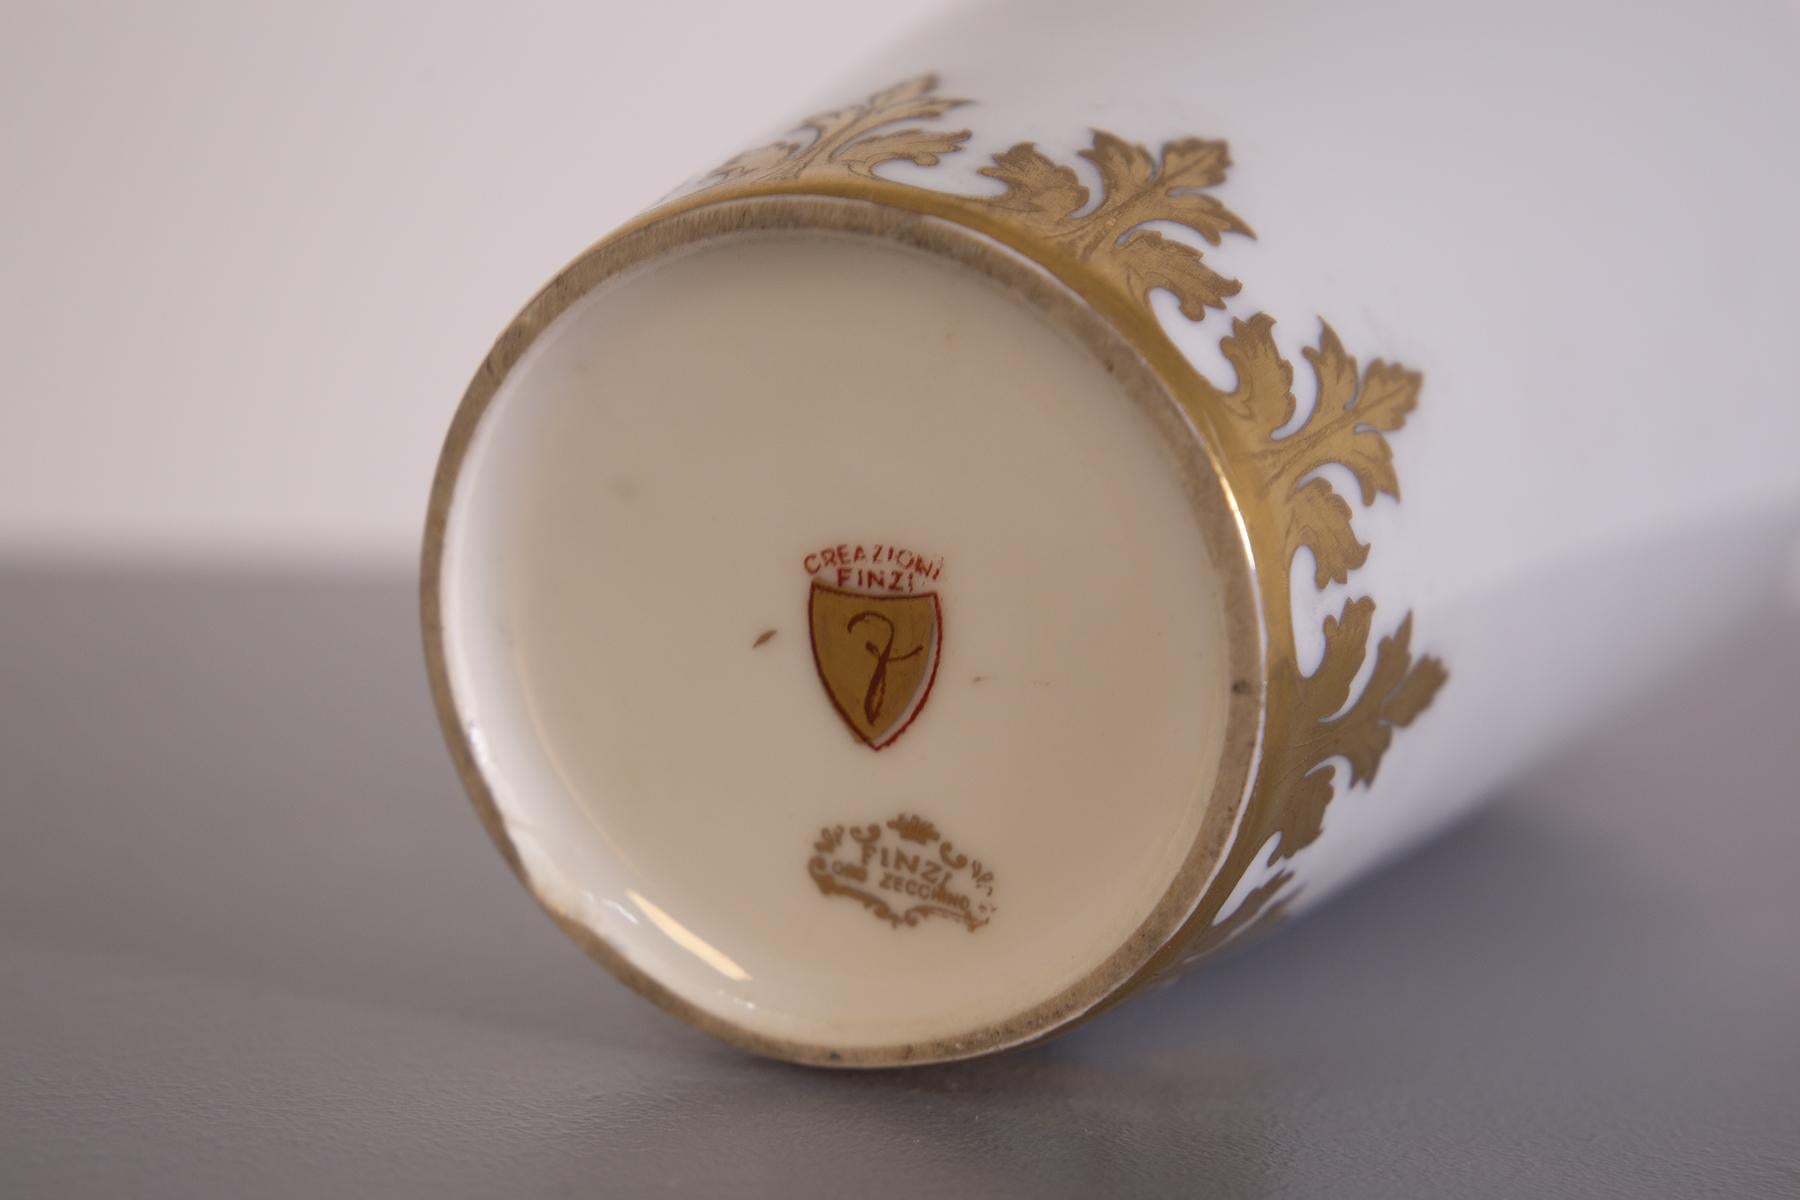 Arrigo Finzi Vase in Porcelain, Gold Painted, Original Label For Sale 1